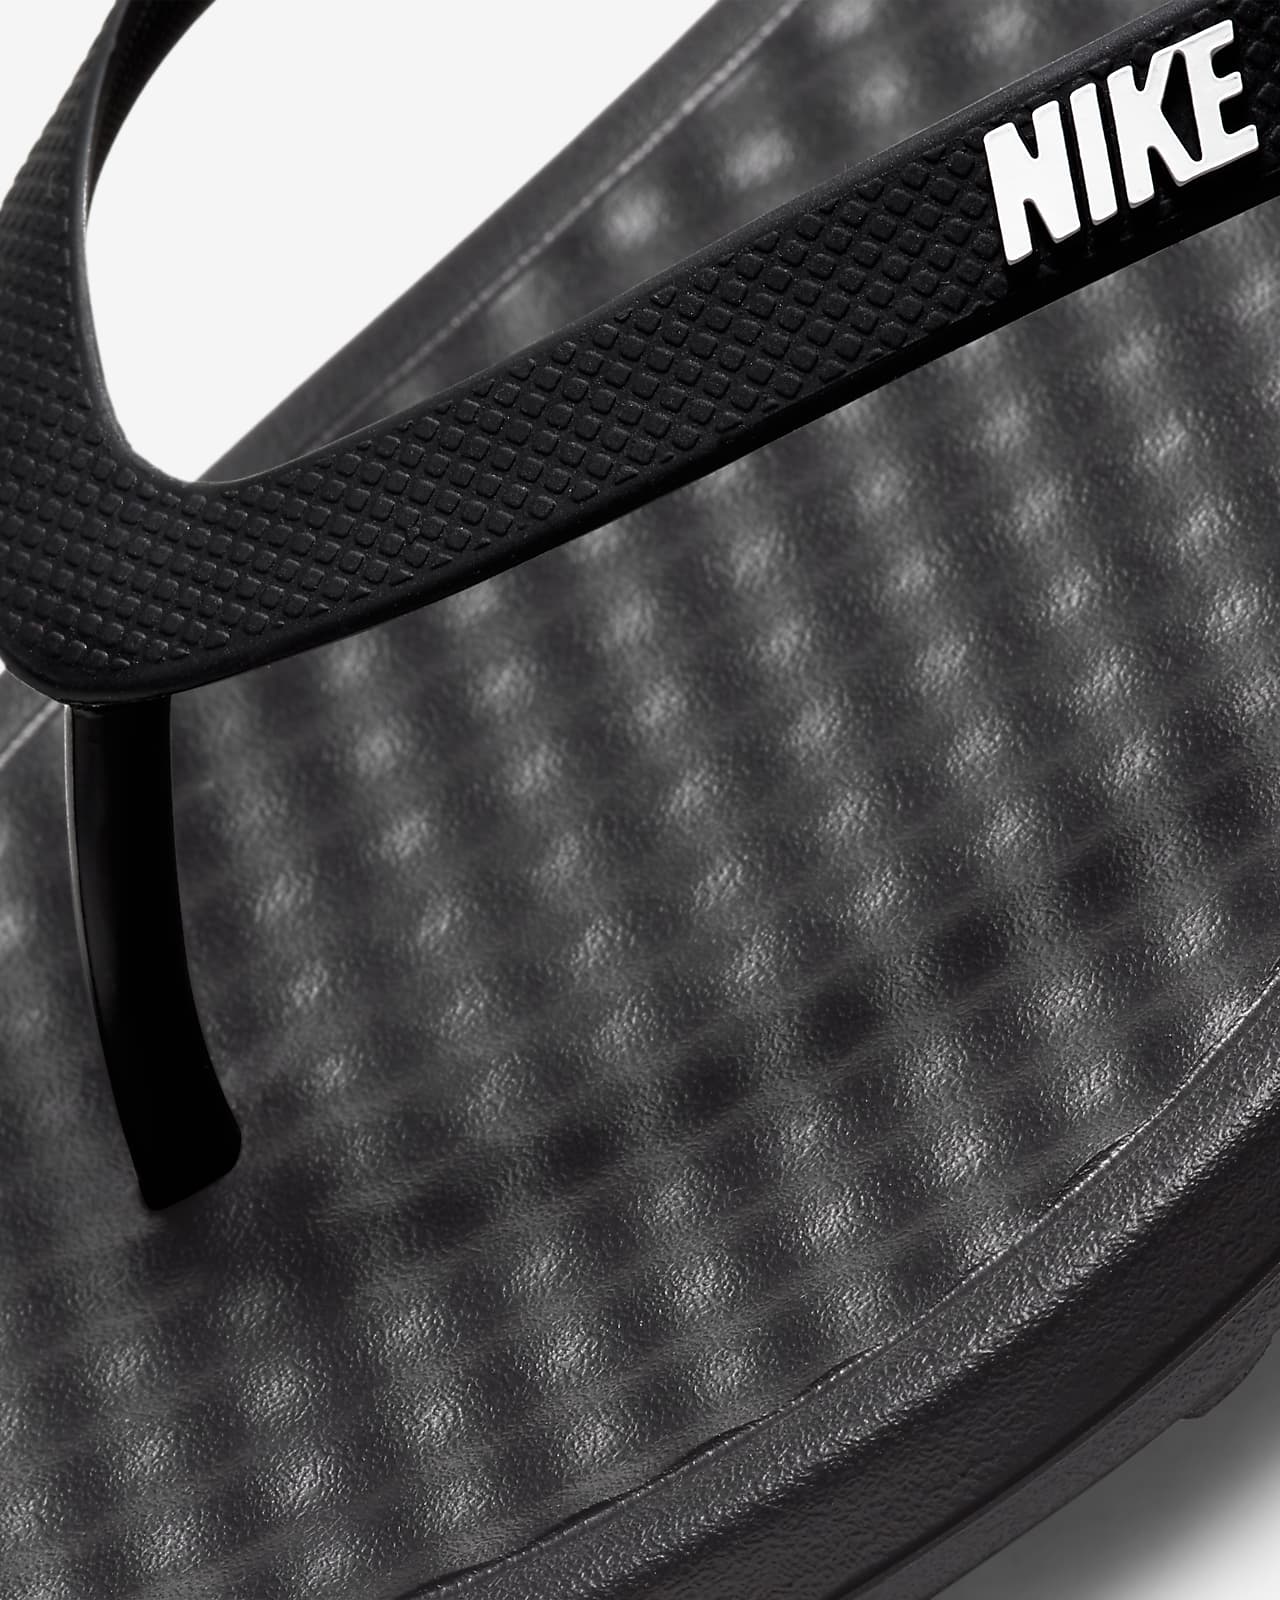 Nike Ondeck Flip-Flop Black/White/Black 10 B (M